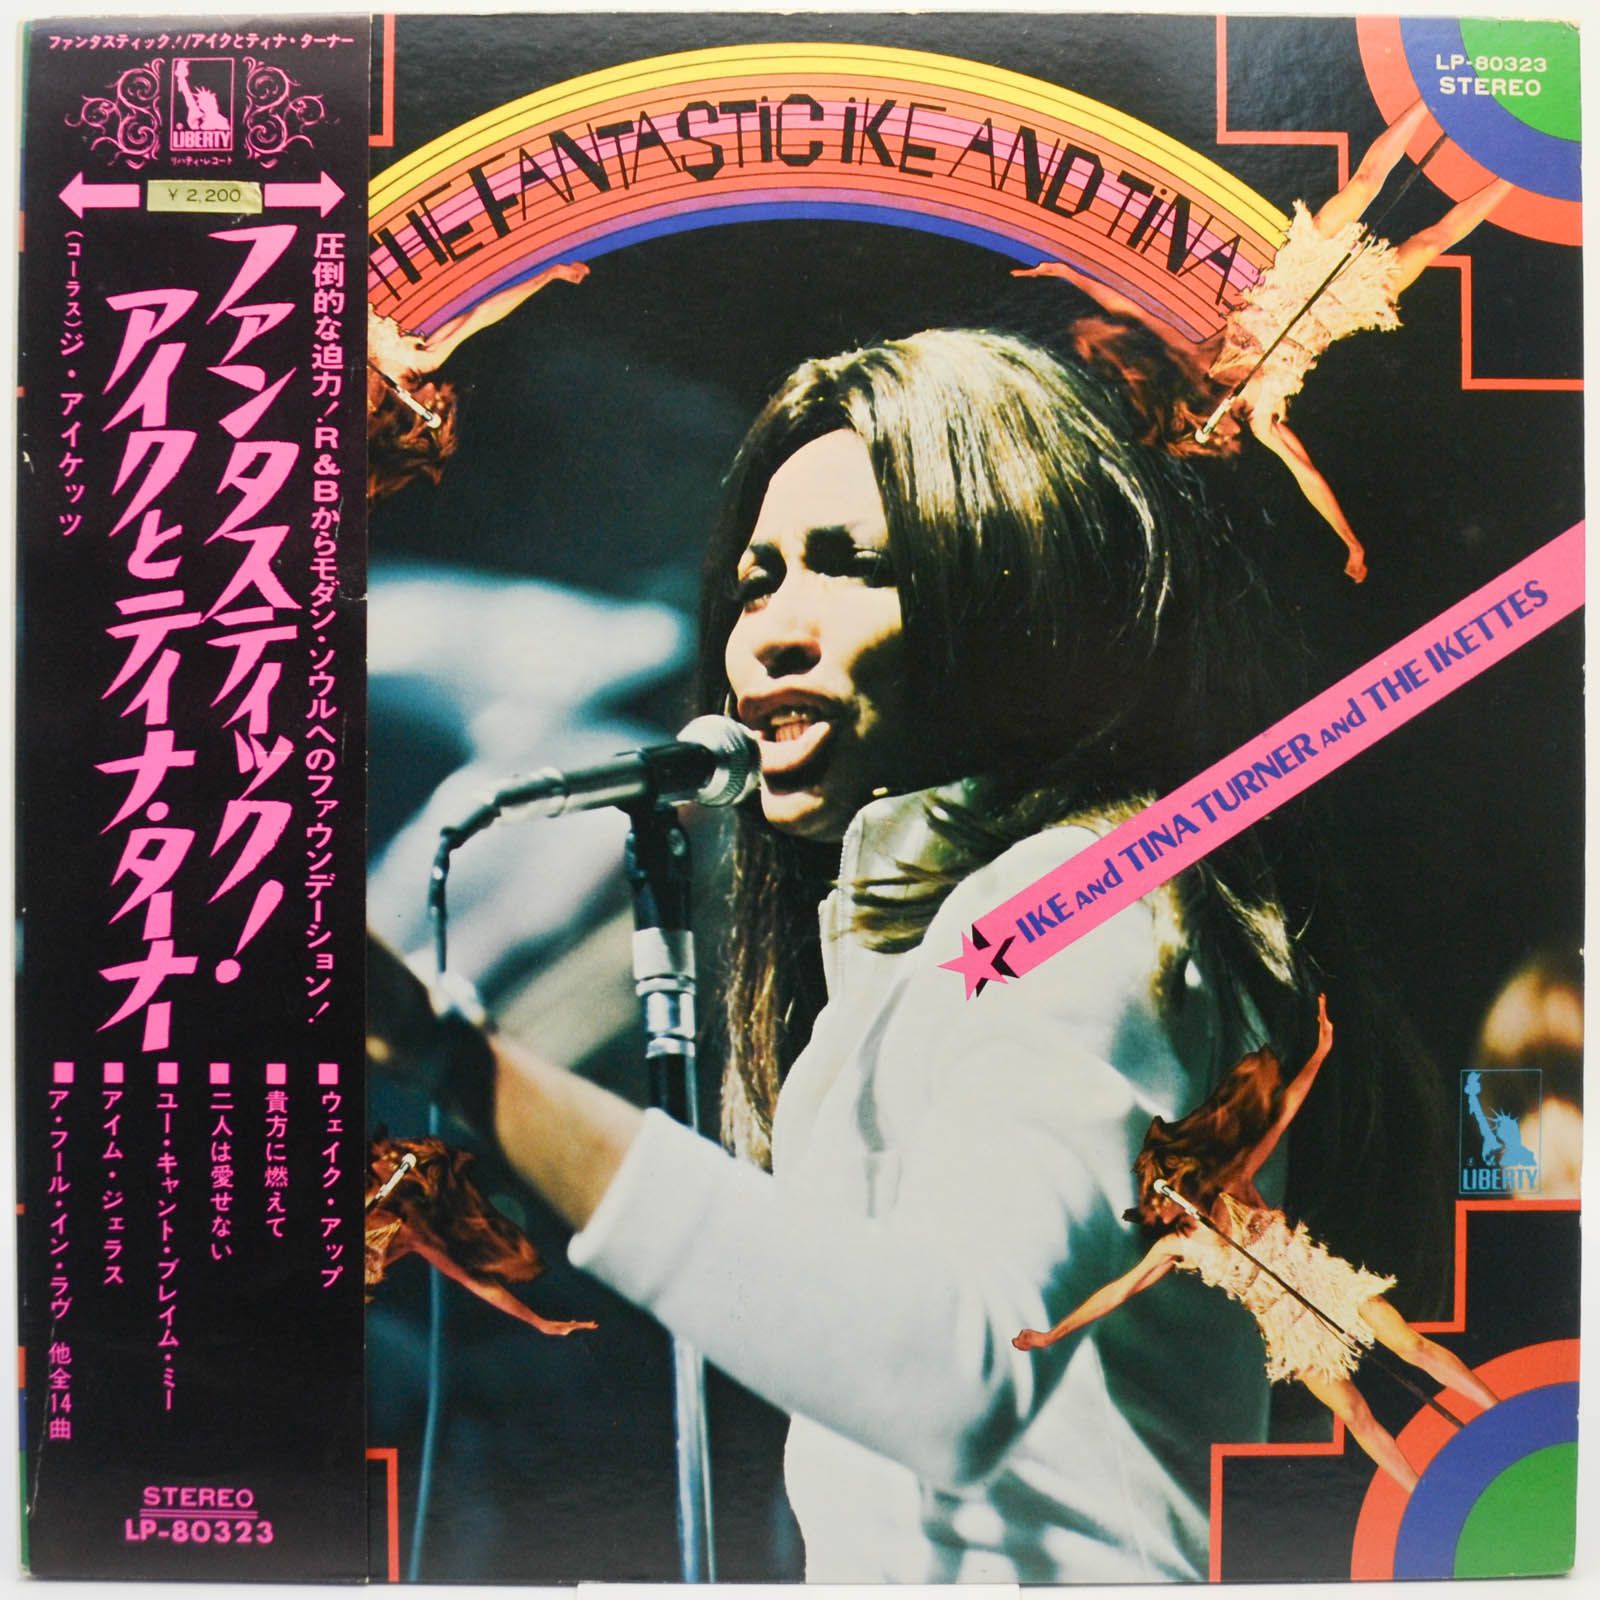 Fantastic Ike And Tina — Ike And Tina Turner And The Ikettes, 1971